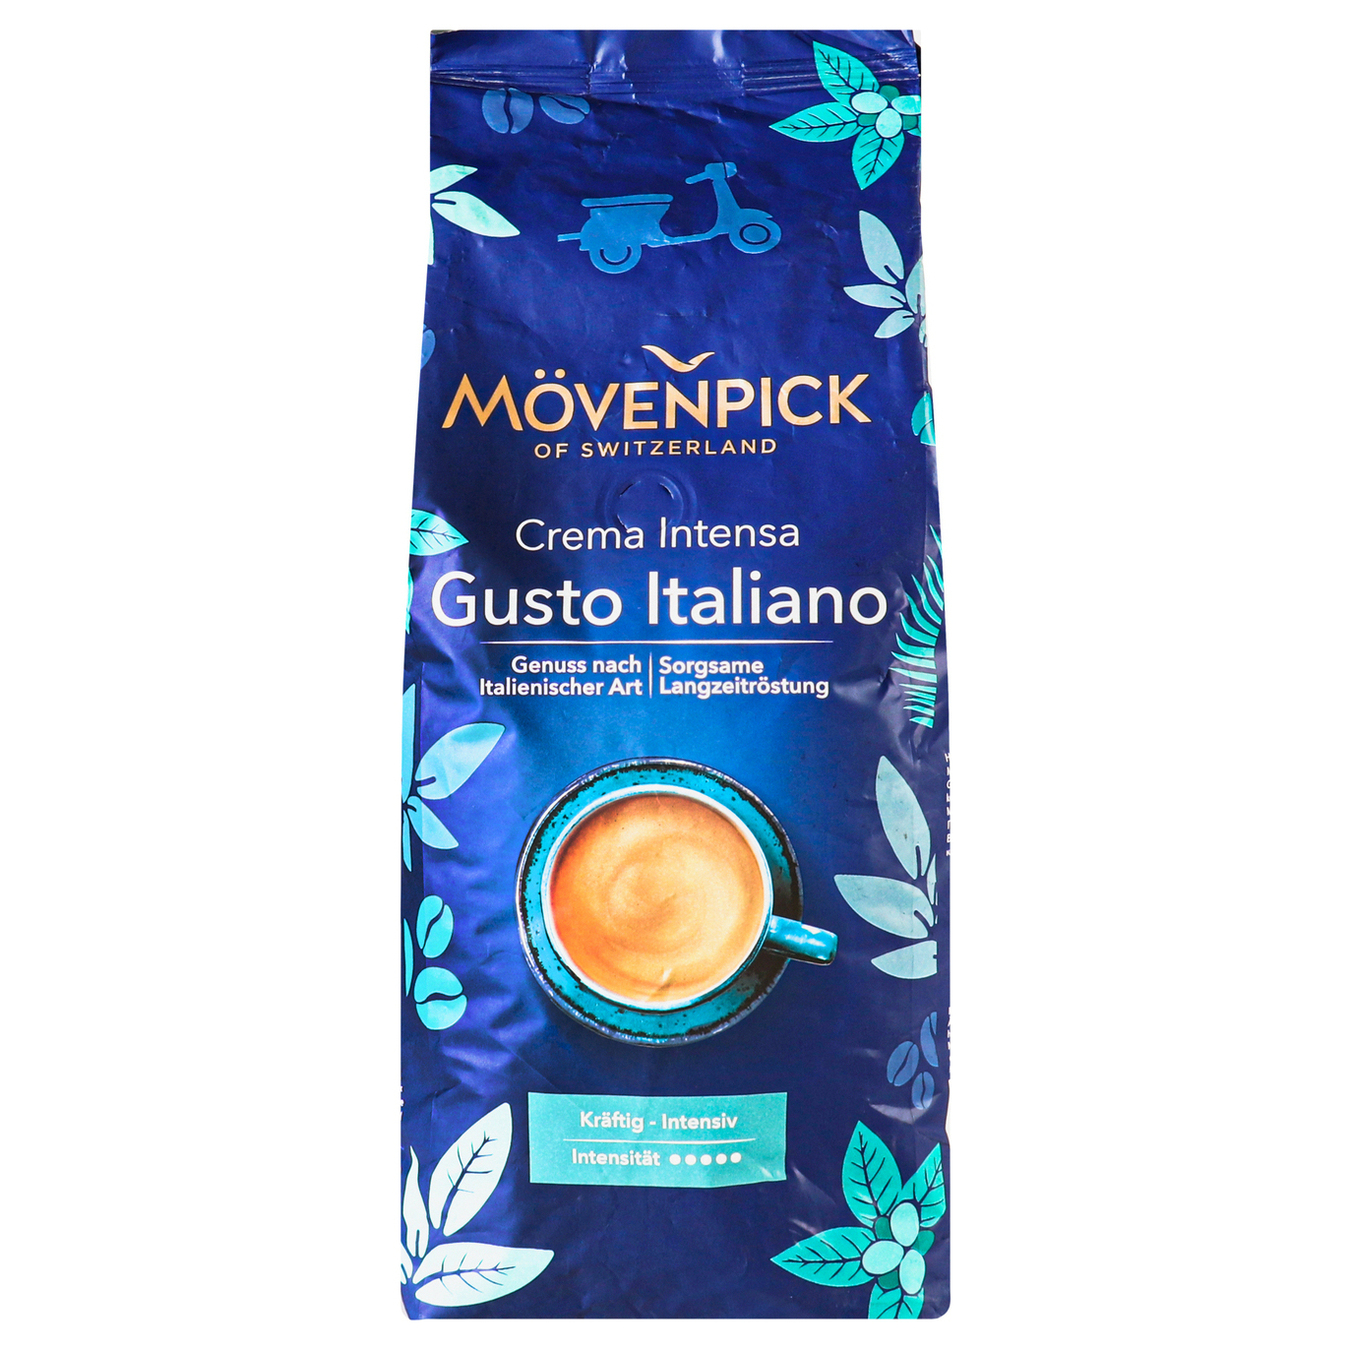 Movenpick Gusto Italiano Coffee Beans 1kg